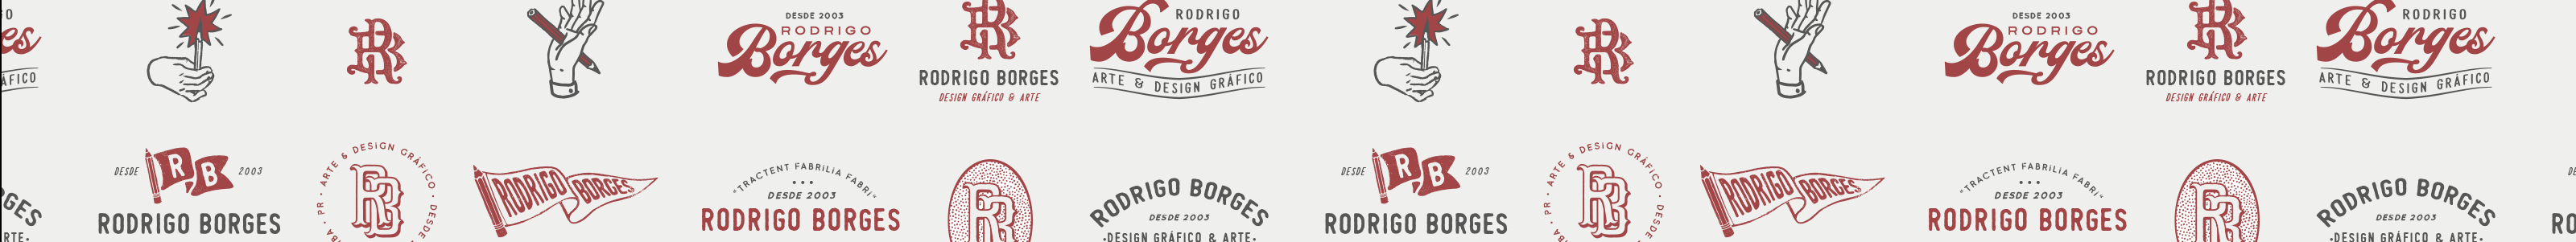 Rodrigo Borges's profile banner